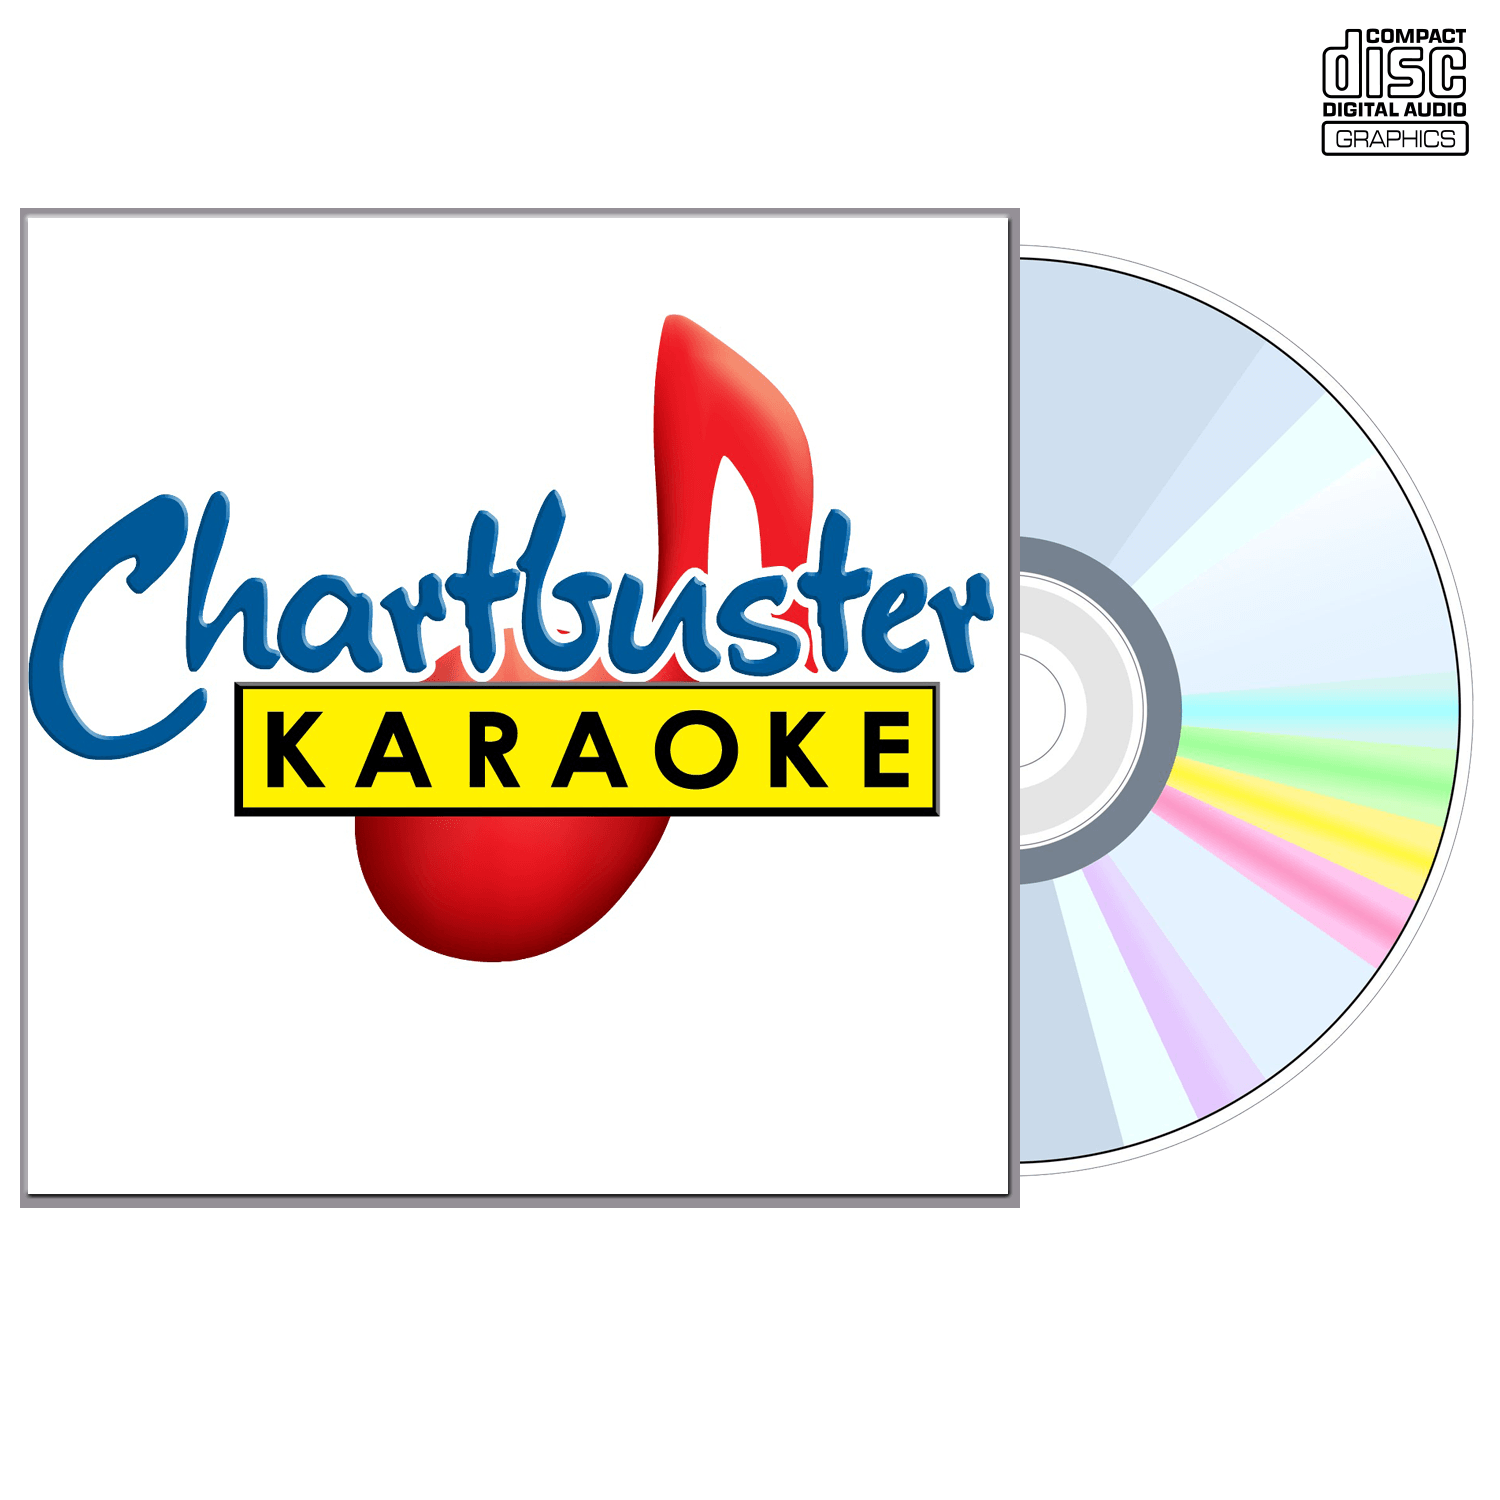 Sammy Davis Jr - CD+G - Chartbuster Karaoke - Karaoke Home Entertainment